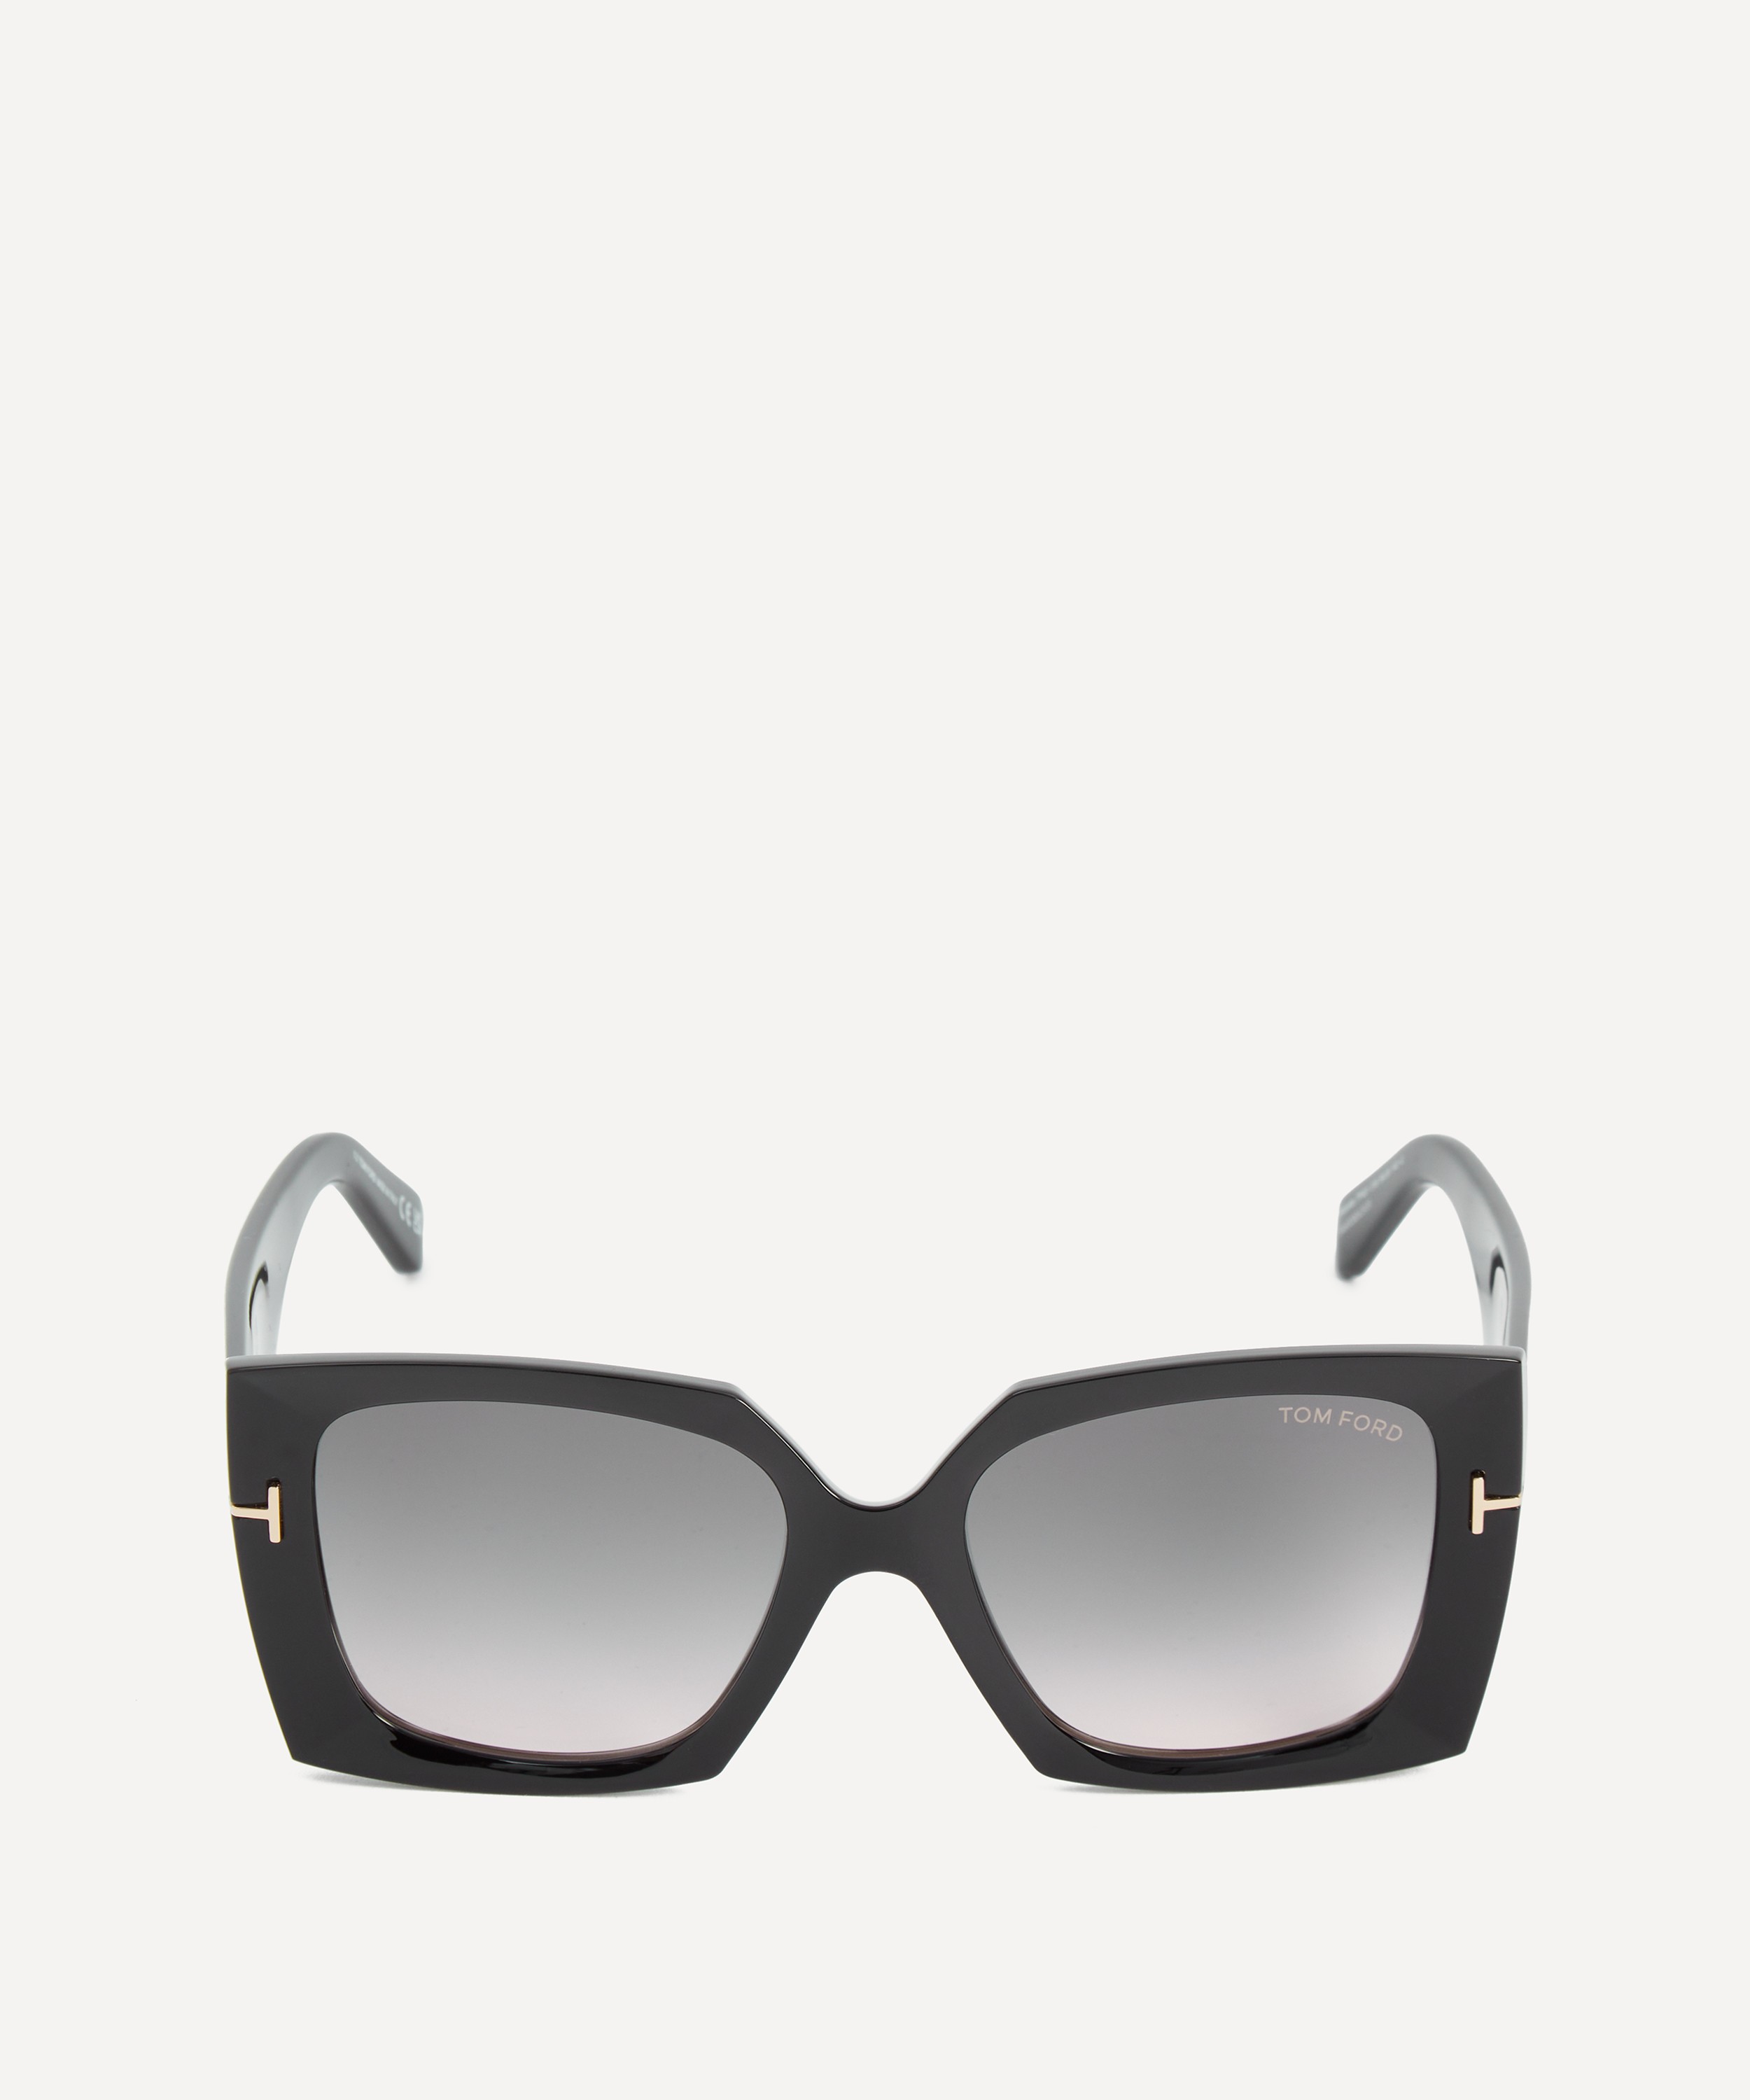 Tom Ford - Jaquetta Oversized Square Sunglasses